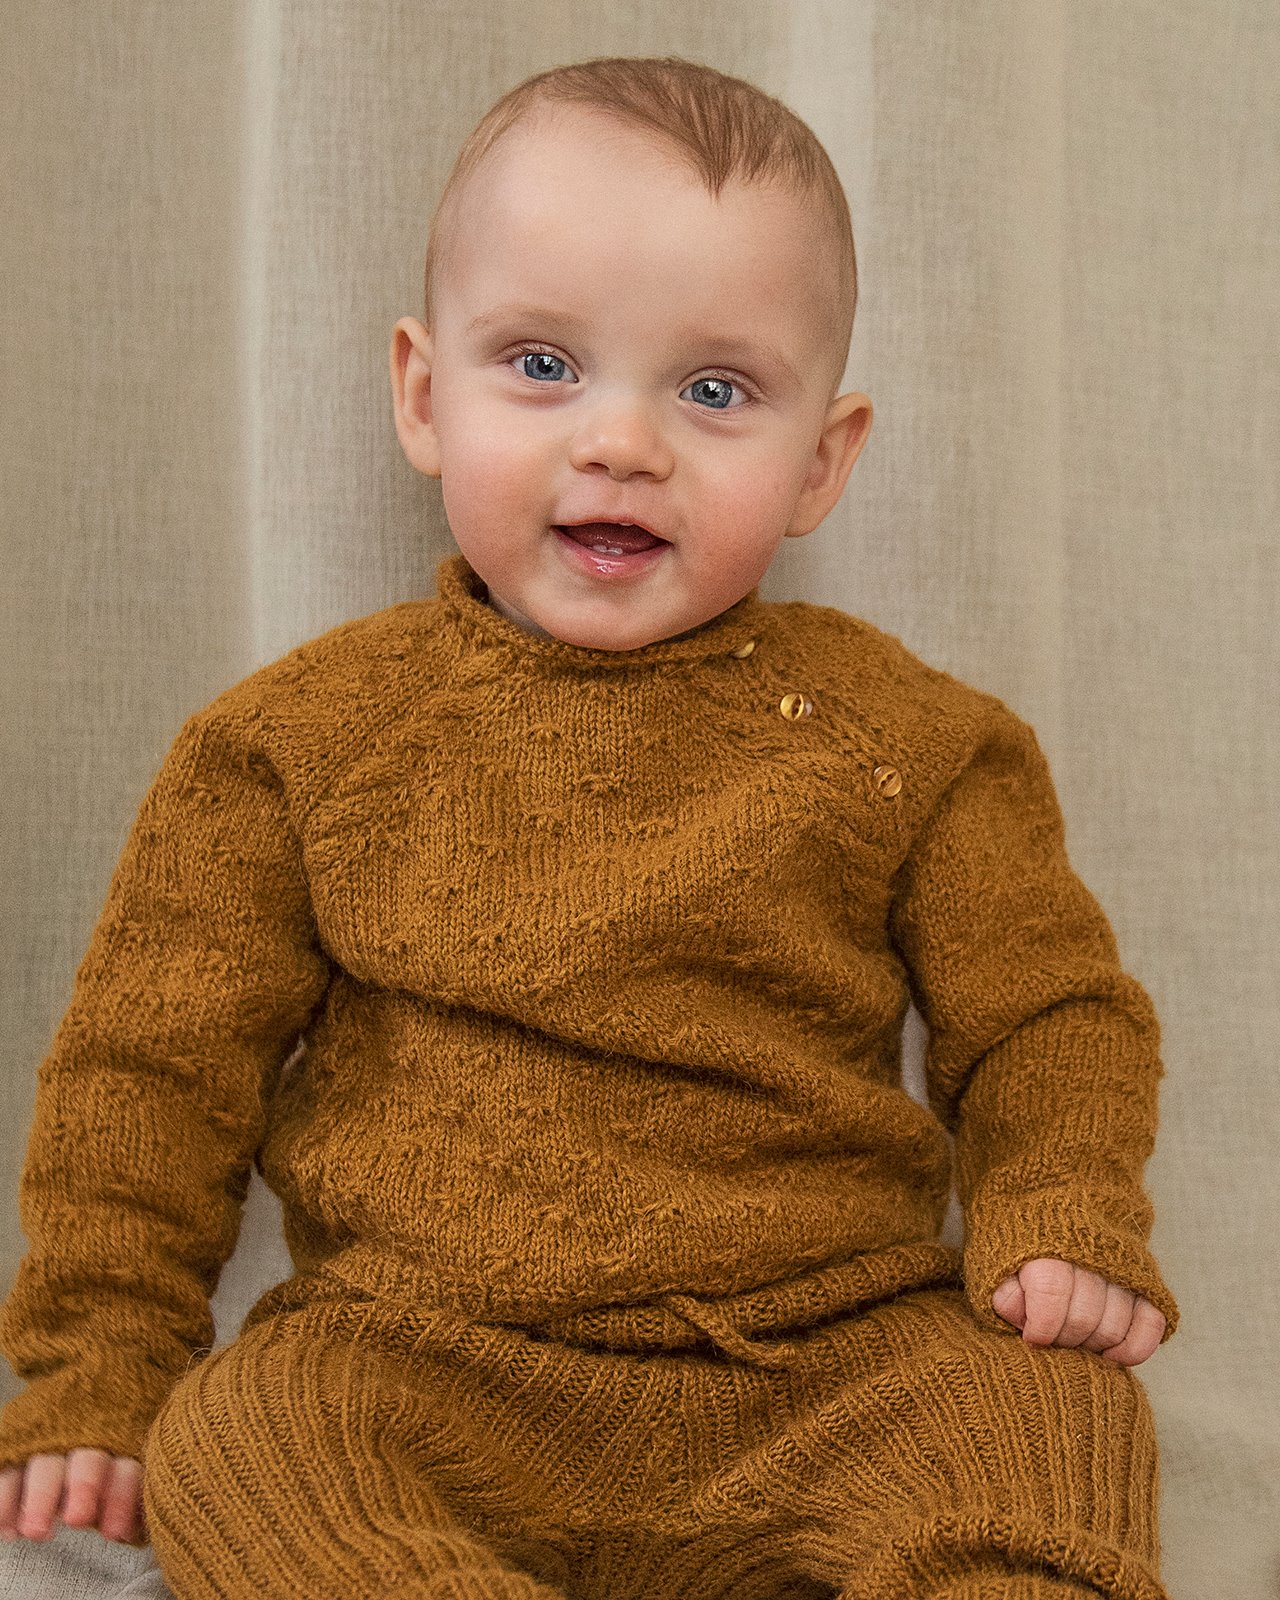 Soft Cuddles Baby Sweater - Woolly Version FRAYA6032.jpg